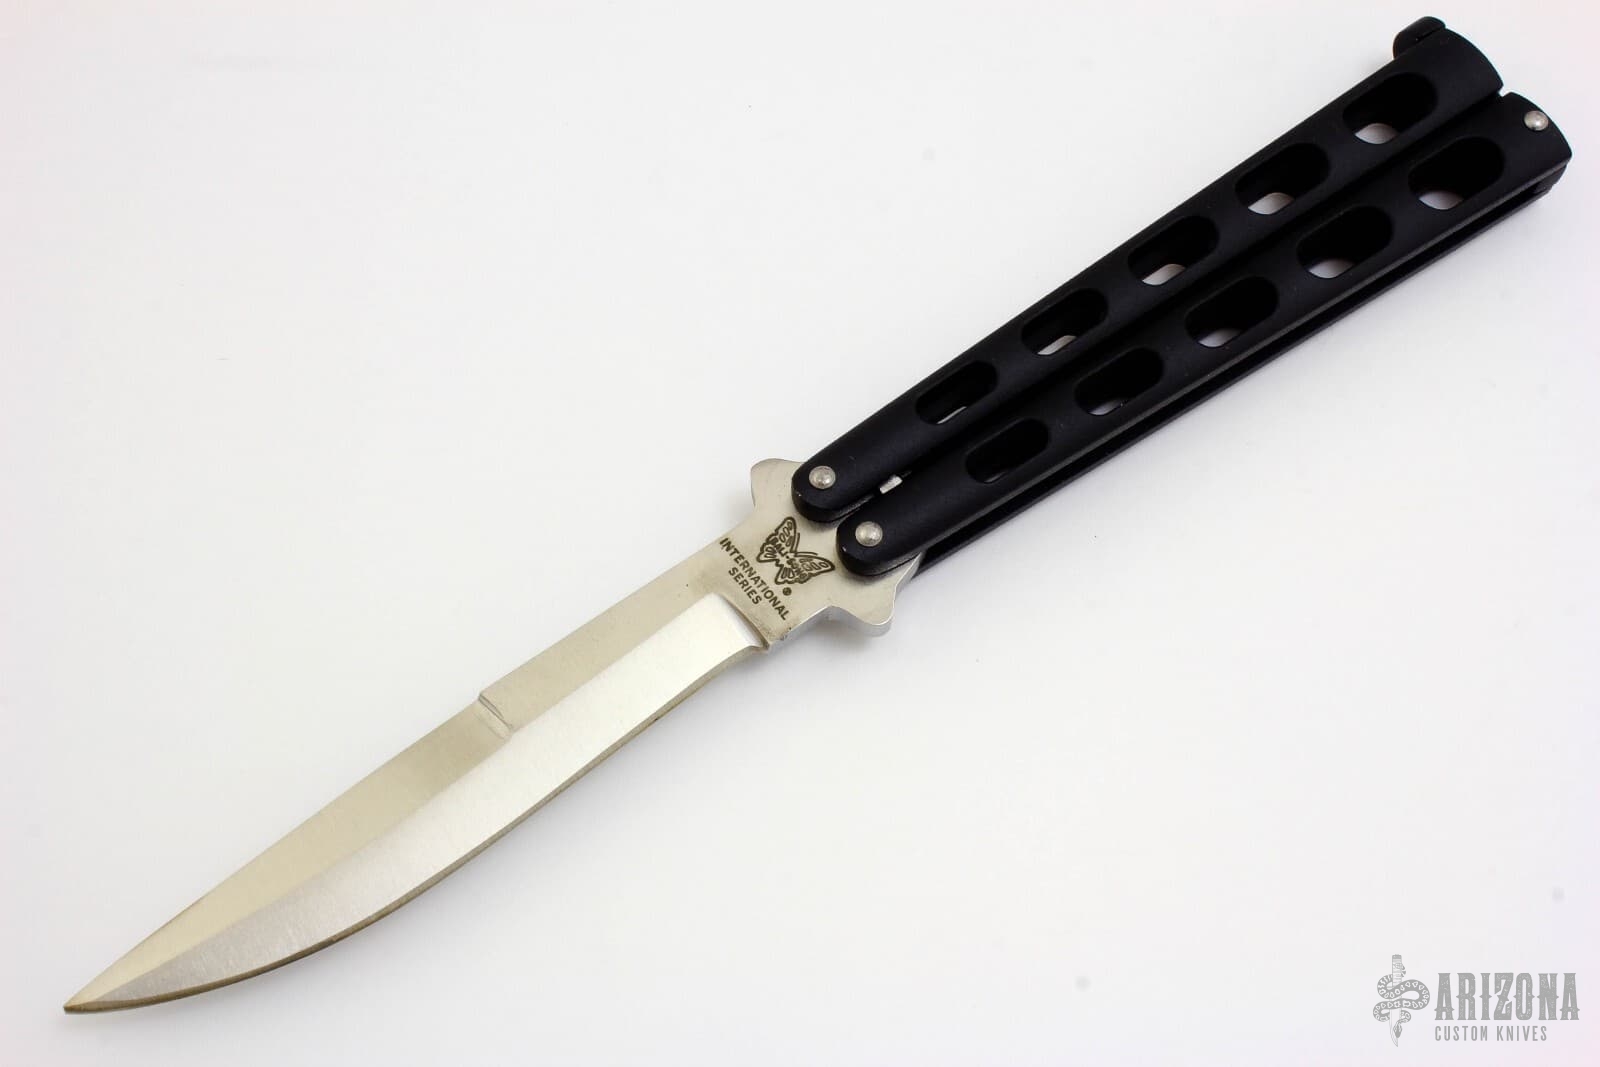 Weehawk Balisong - International Series 1985 | Arizona Custom Knives